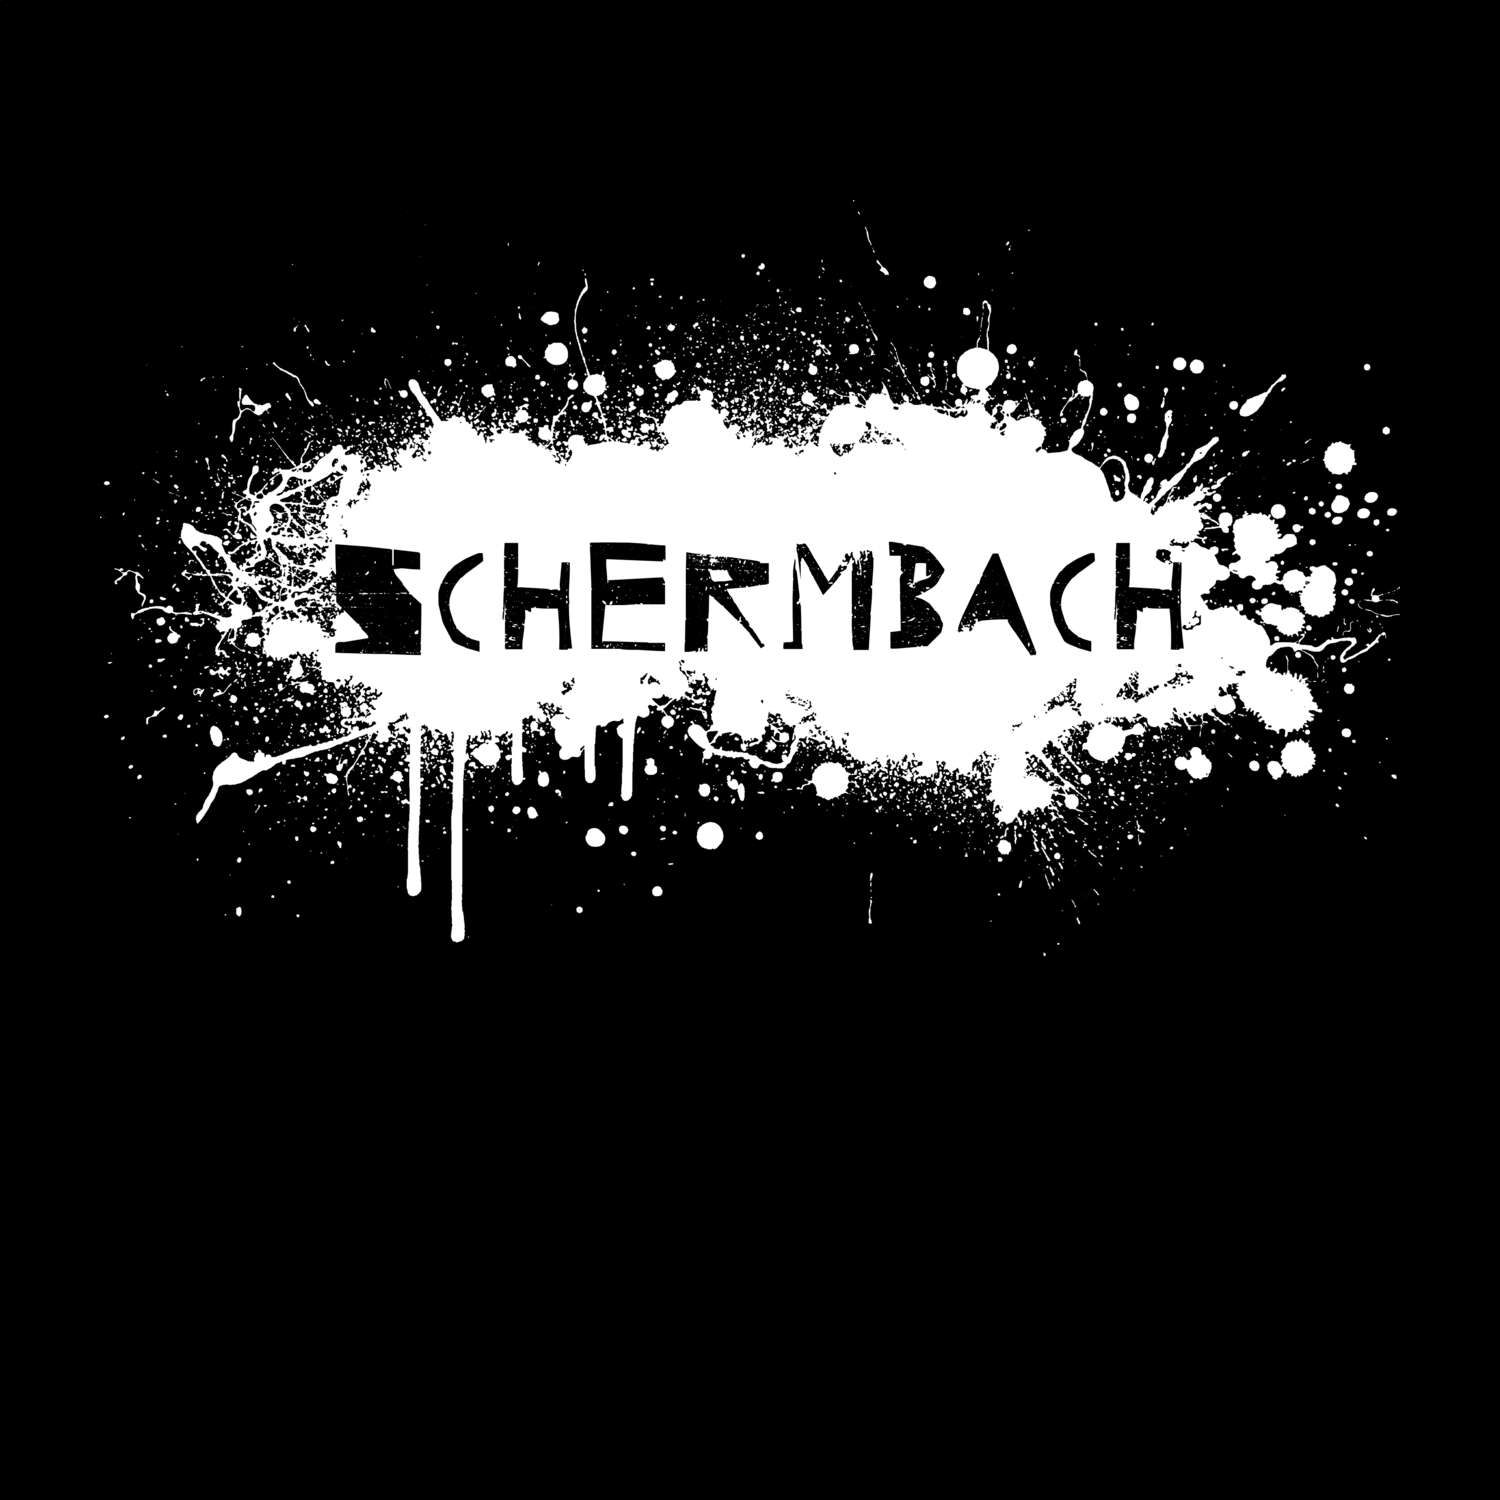 Schermbach T-Shirt »Paint Splash Punk«